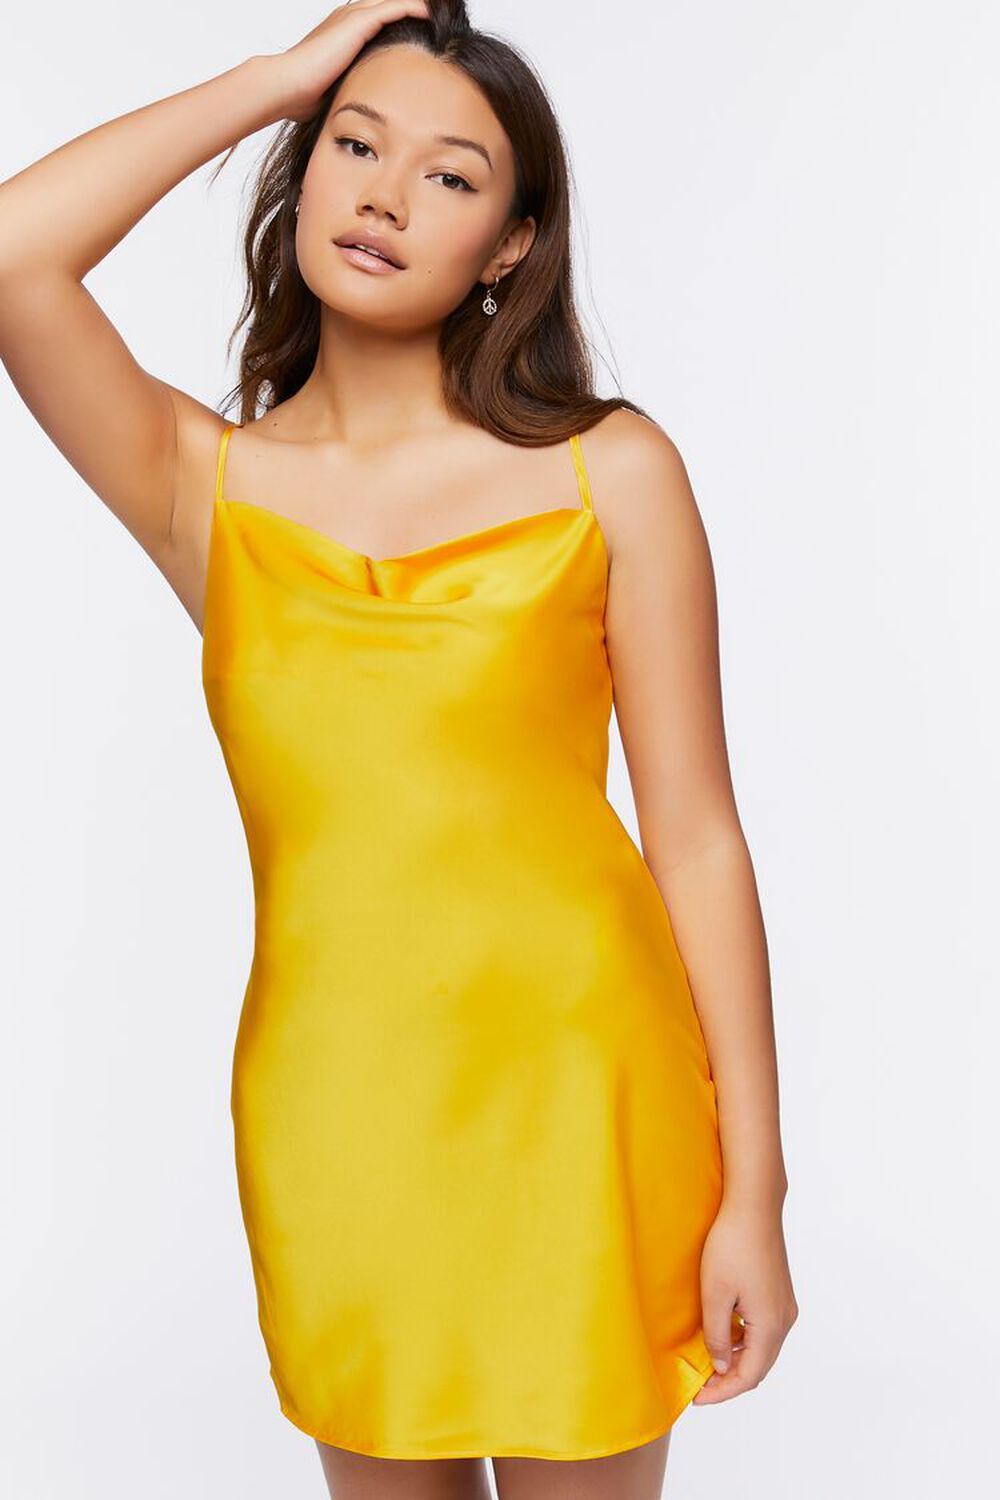 VARSITY GOLD Satin Mini Slip Dress, image 1